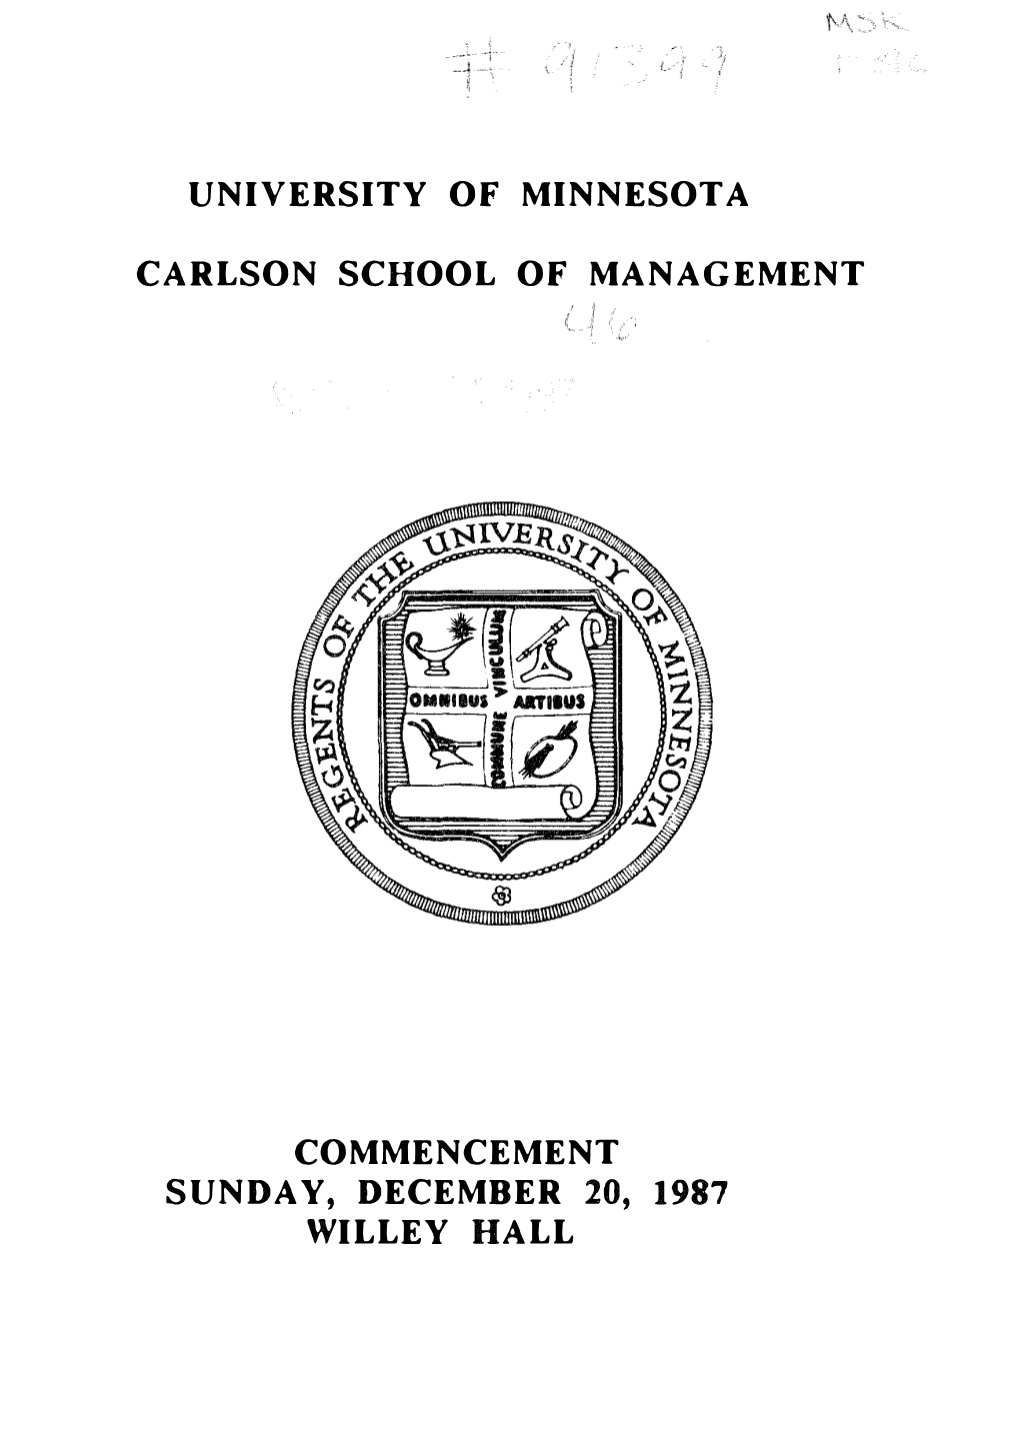 University of Minnesota Carlson School of Management Commencement